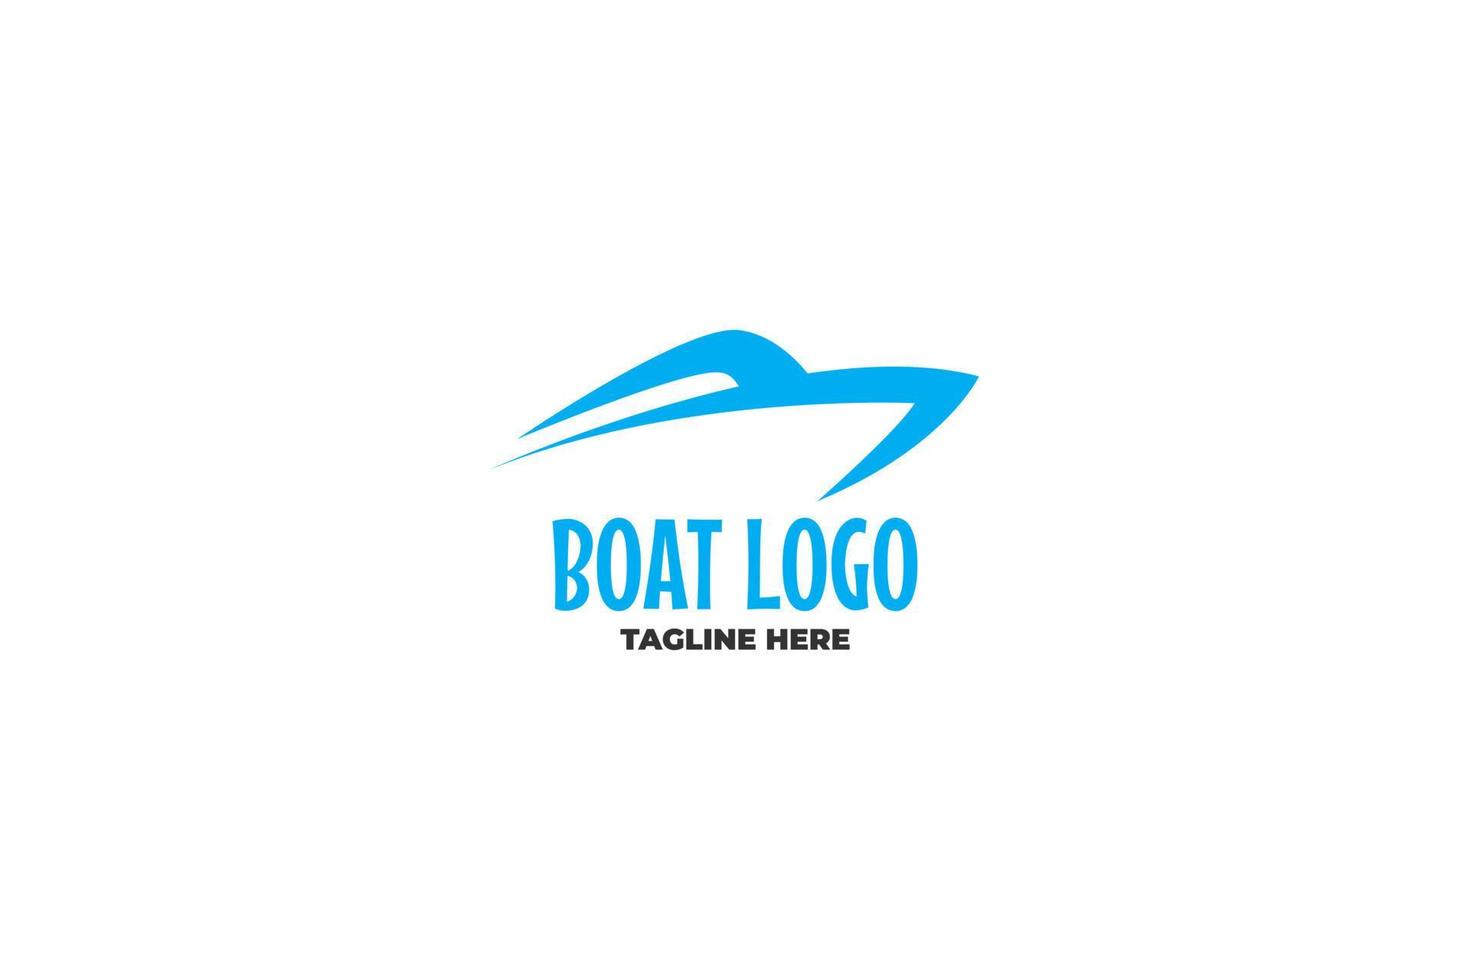 flache blaue form jetboot logo design vektorgrafik symbol symbol illustration kreative idee vektor